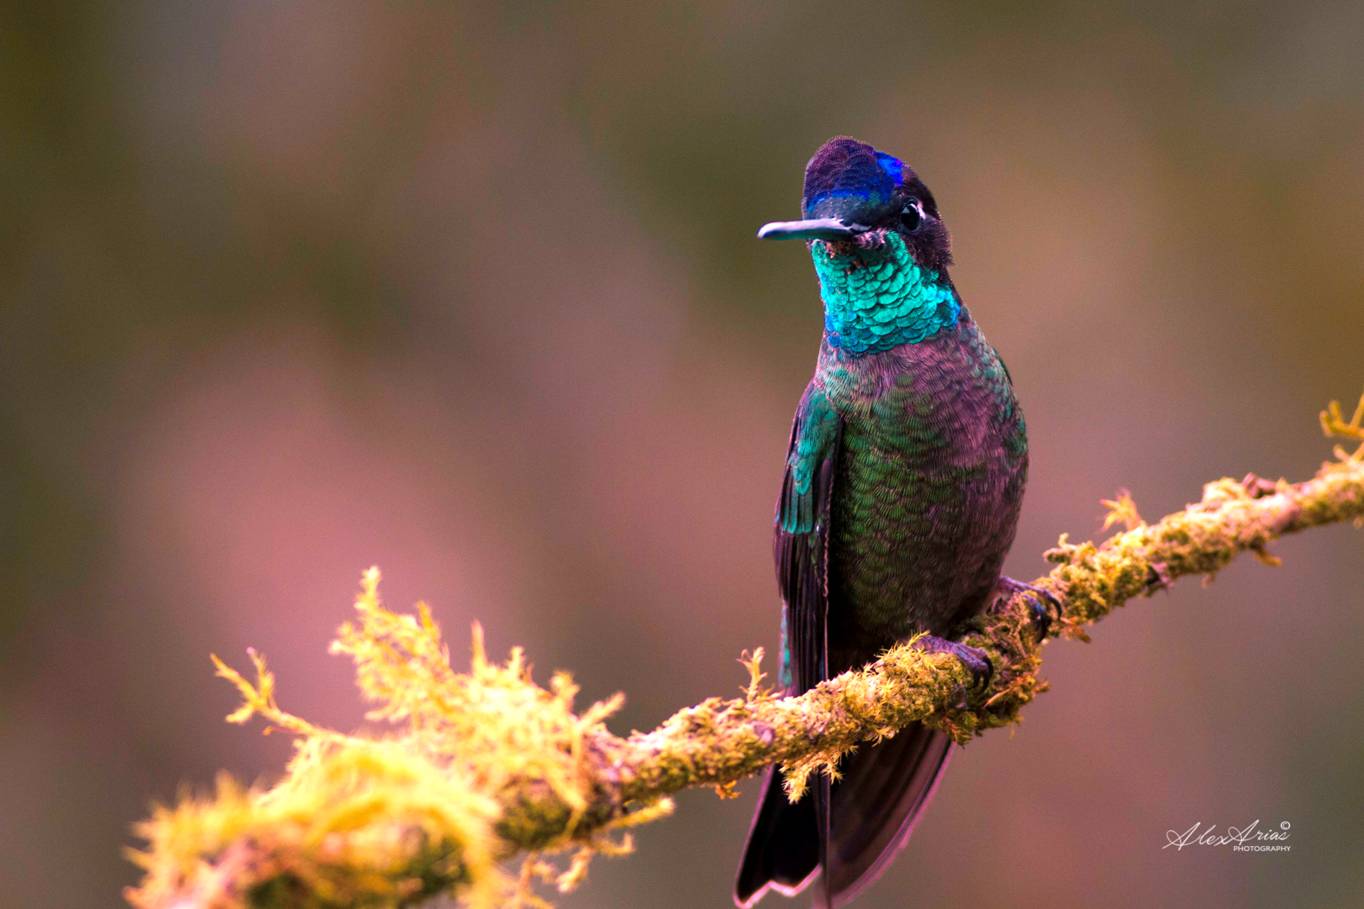 Costa Rica bird seen on birding trip